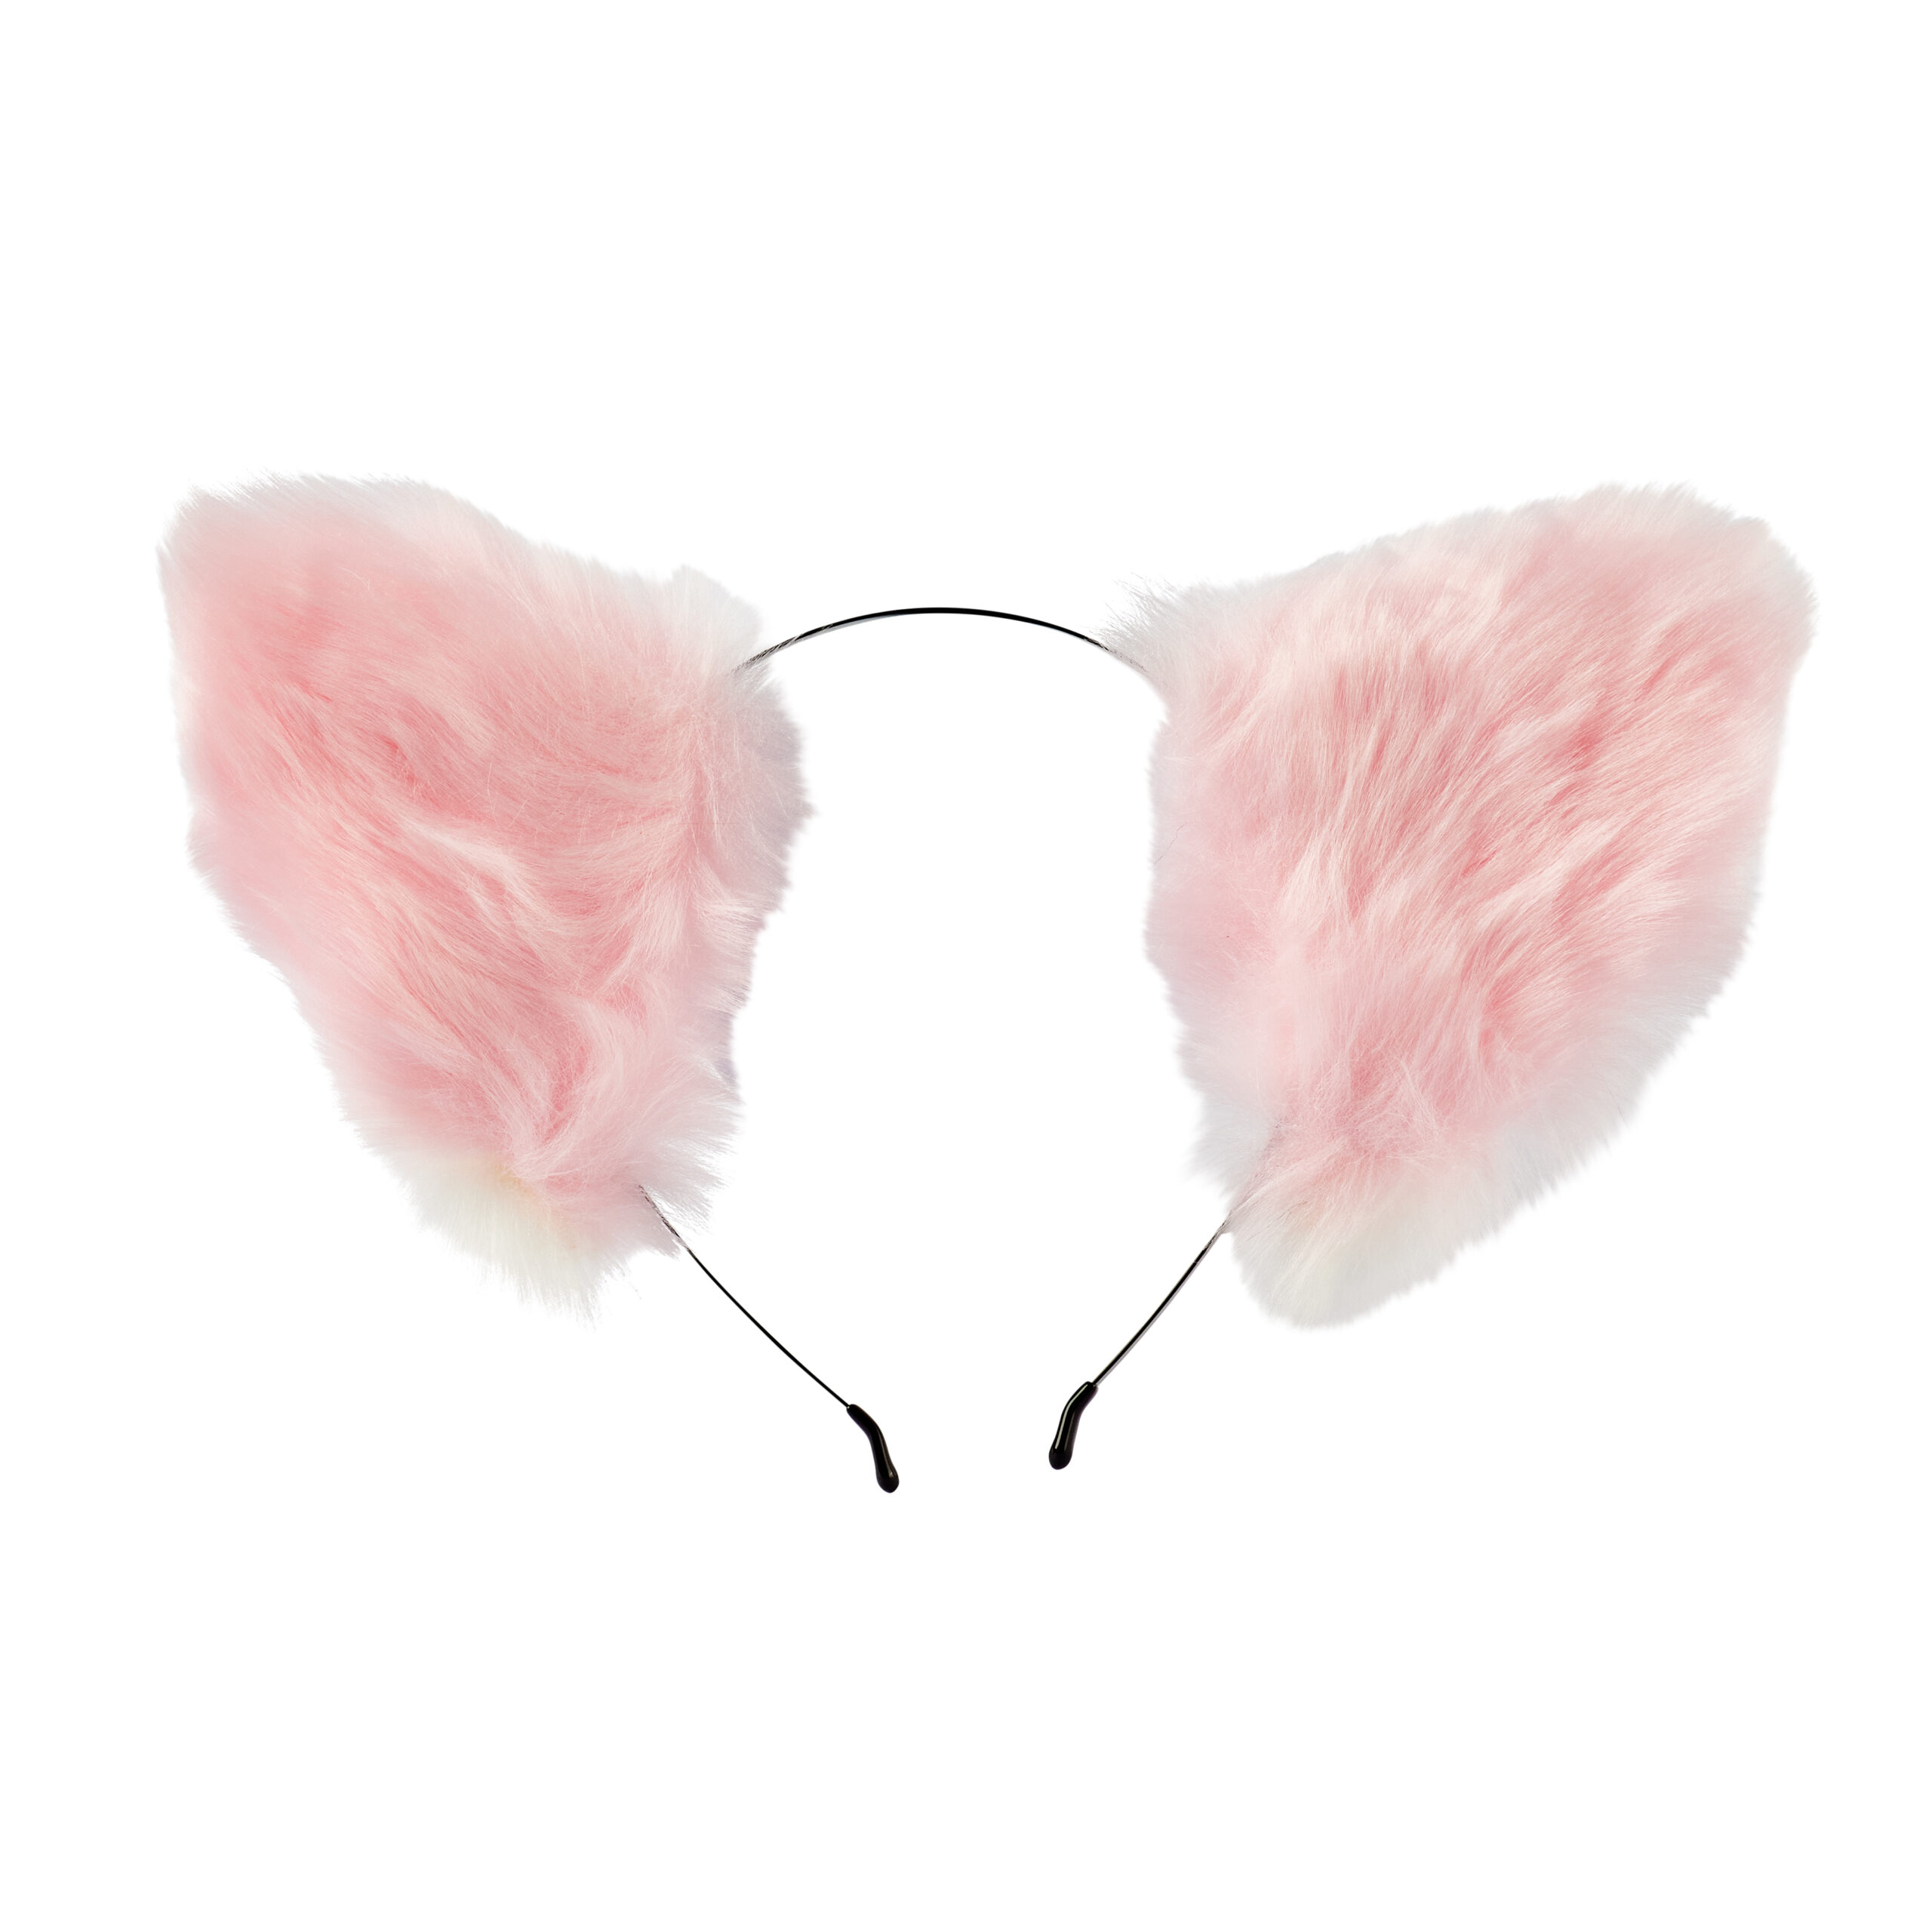 Roxy Pink with White Ear Headband - Cybershop Australia